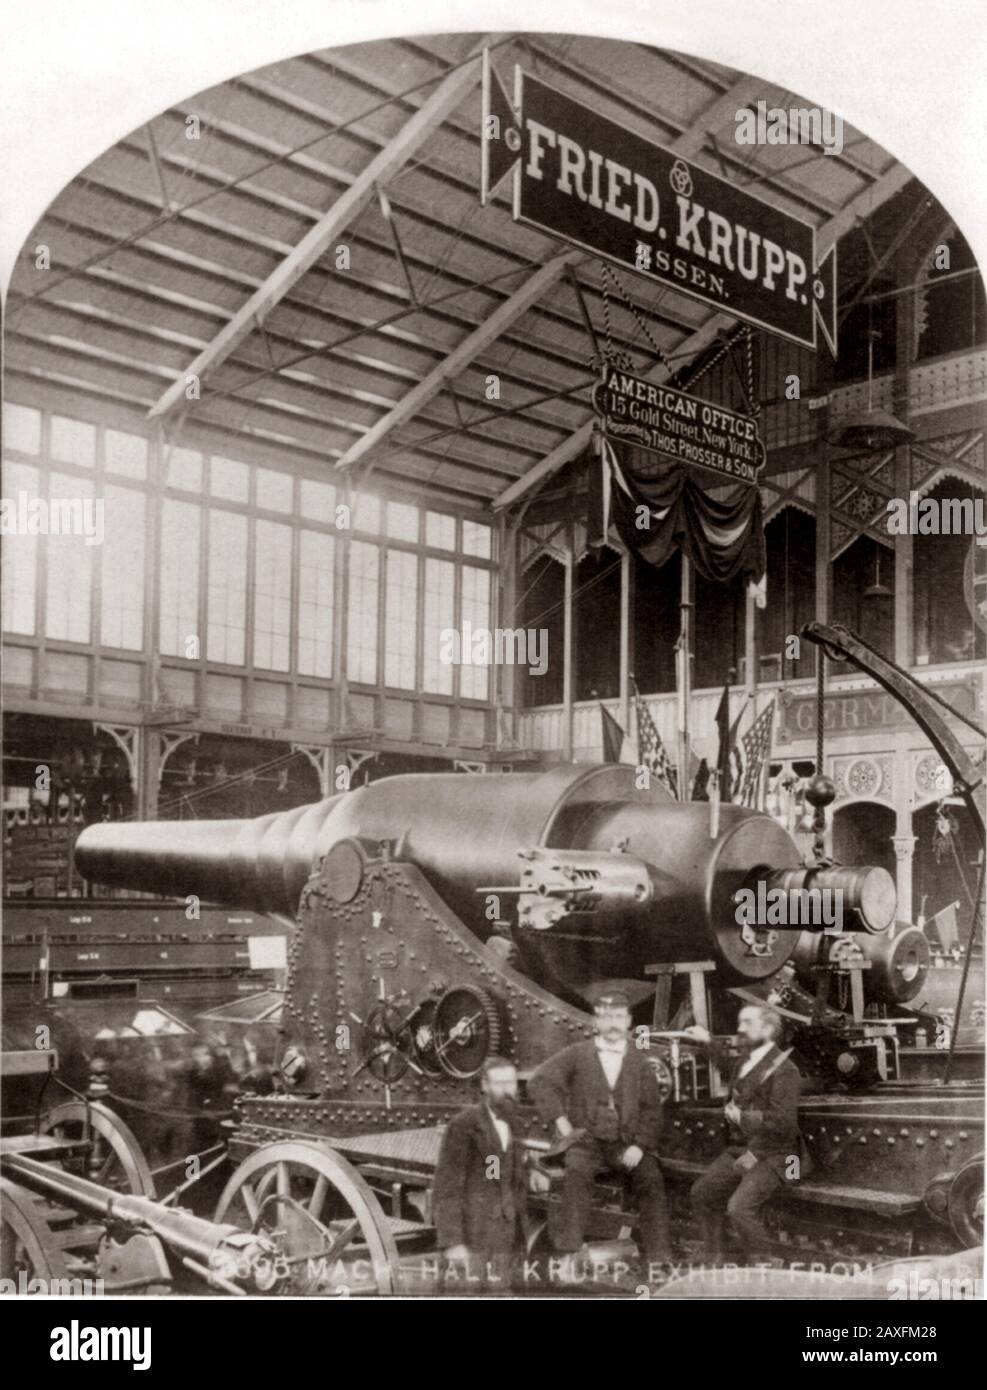 1876 , march , Philadelphia , USA : International Centennial Exhibition, Philadelphia , Pa. The german cannon Krupp Exhibit  calarge wheeled cannon - Machinery Hall - ARMI - ARMA - FRIEDERICH KRUPP - CANNONE - GUN  -  INDUSTRIA - DINASTIA INDUSTRIALE - FABBRICA - ARCHITETTURA - ARCHITECTURE  - HISTORY -  foto storica - INDUSTRY - INDUSTRIA -  ESPOSIZIONE UNIVERSALE FILADELFIA ---- ARCHIVIO GBB Stock Photo